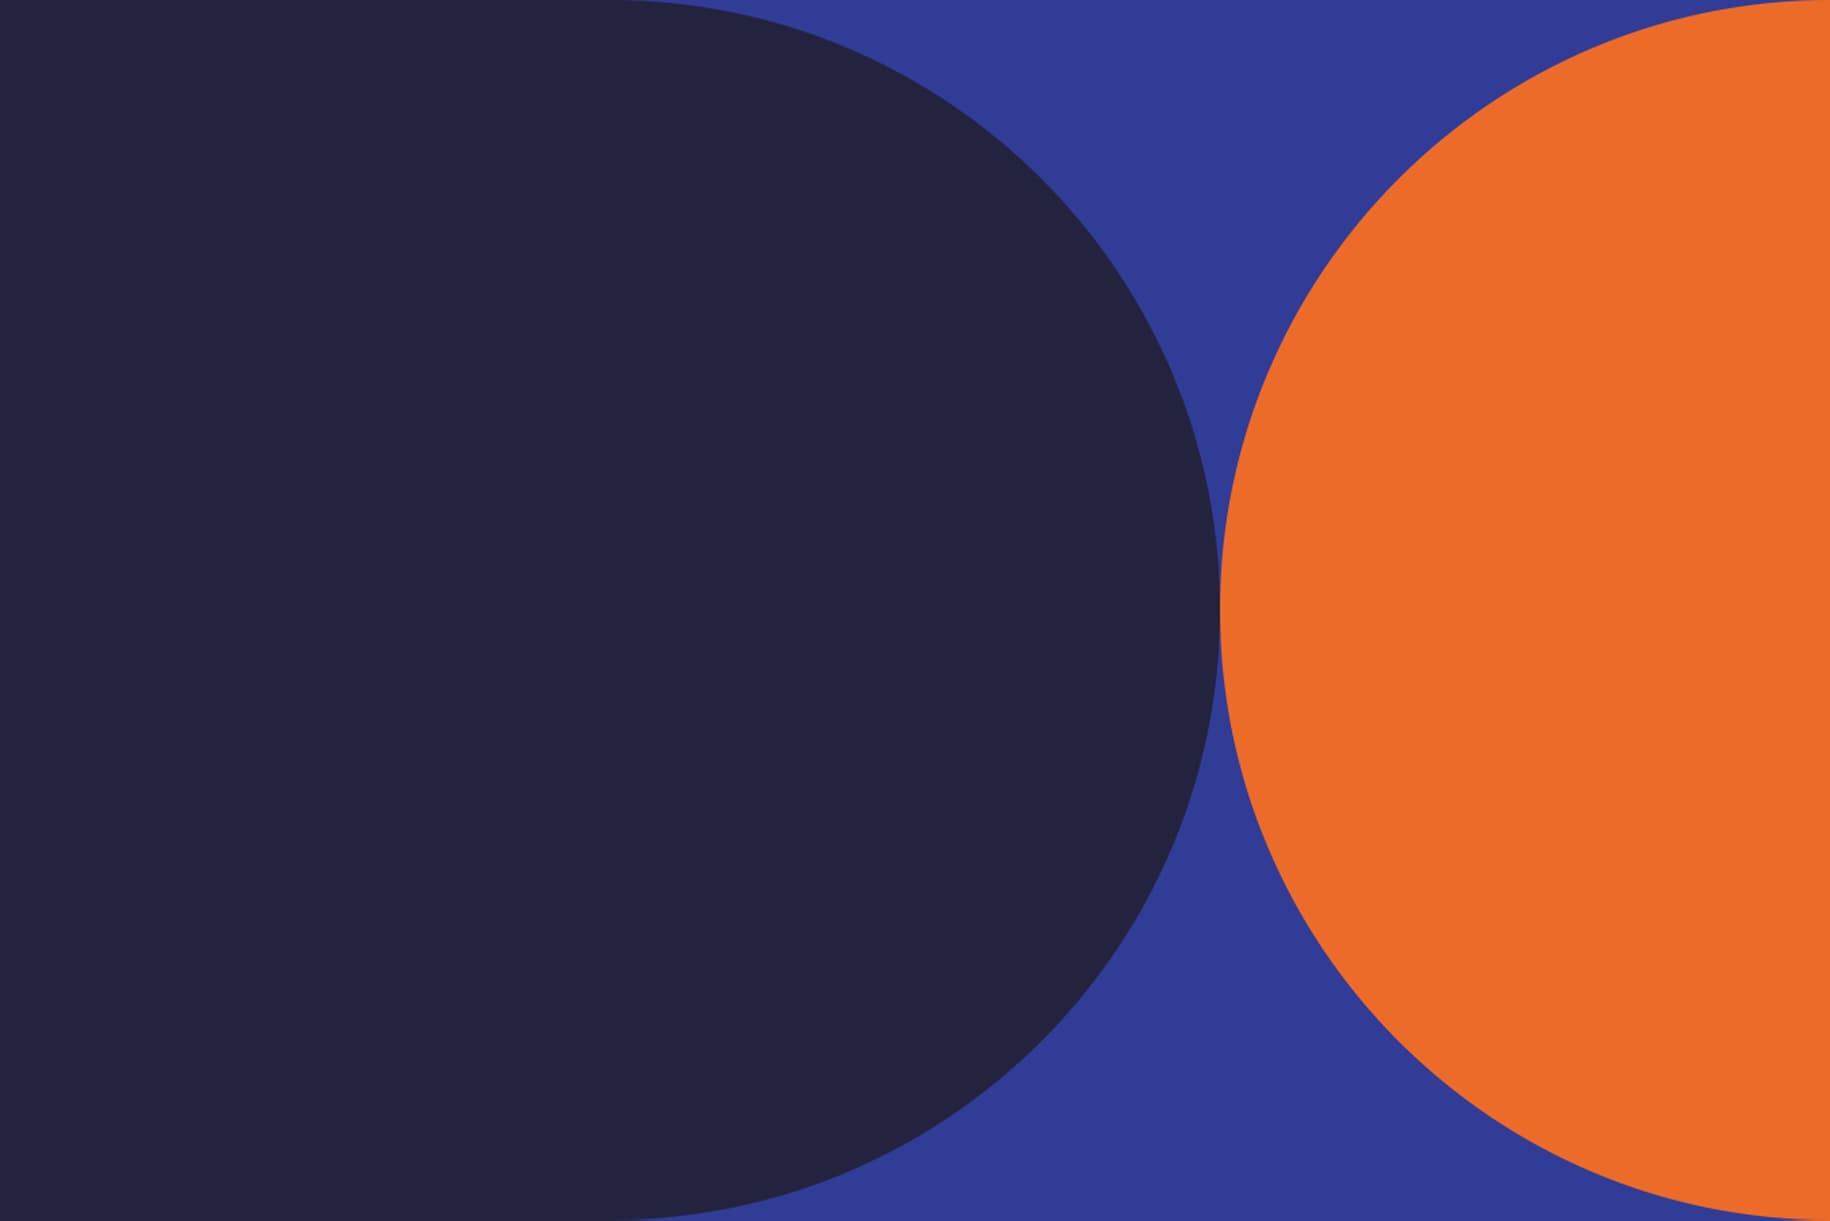 midnight shape and orange half circle 